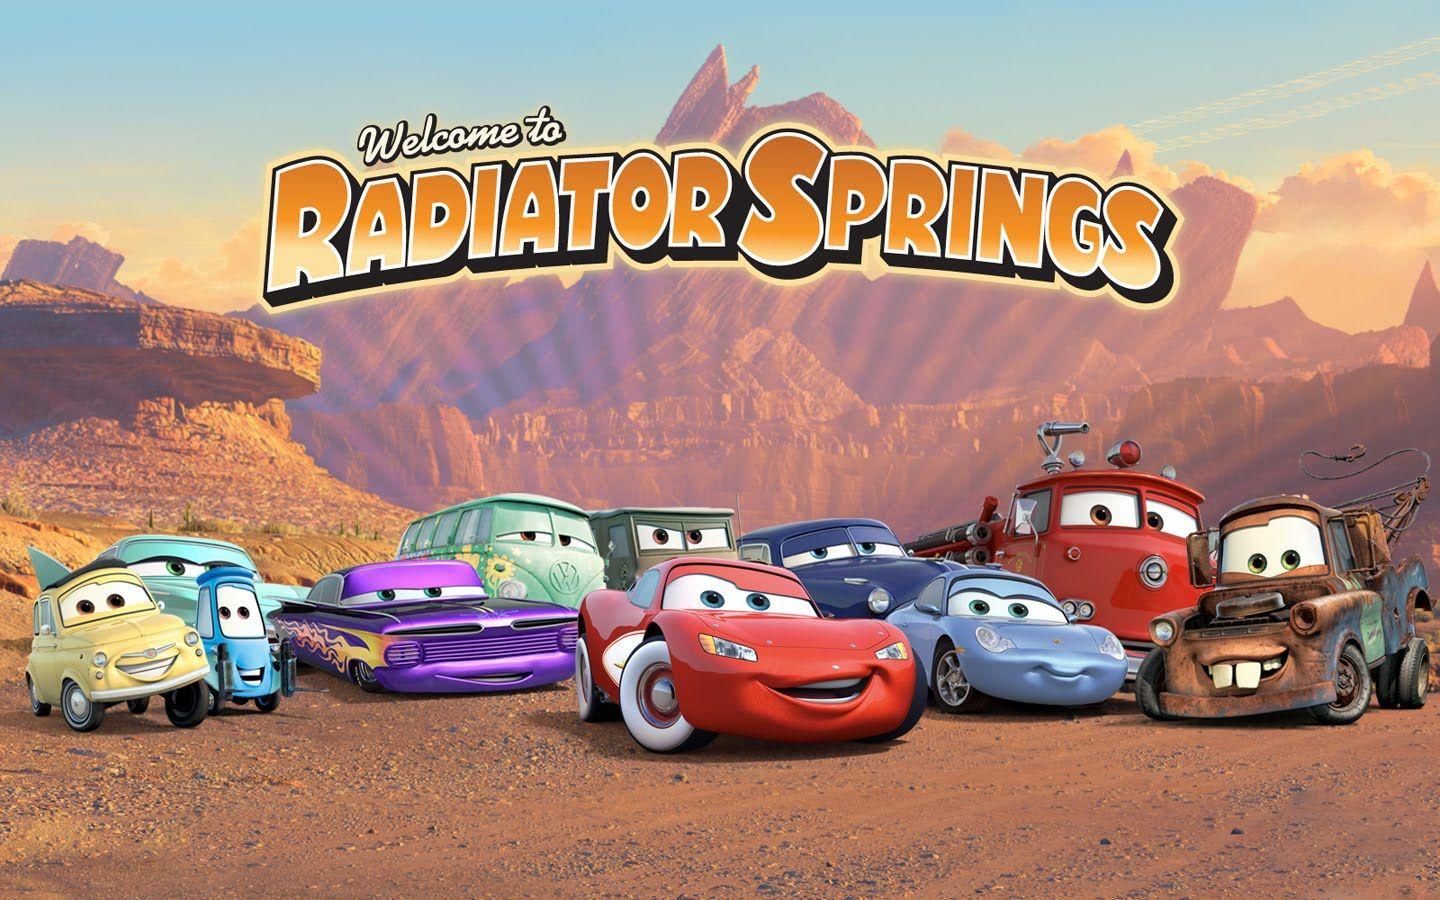 Disney Pixar Cars Radiator Springs. customize imagecreate collage